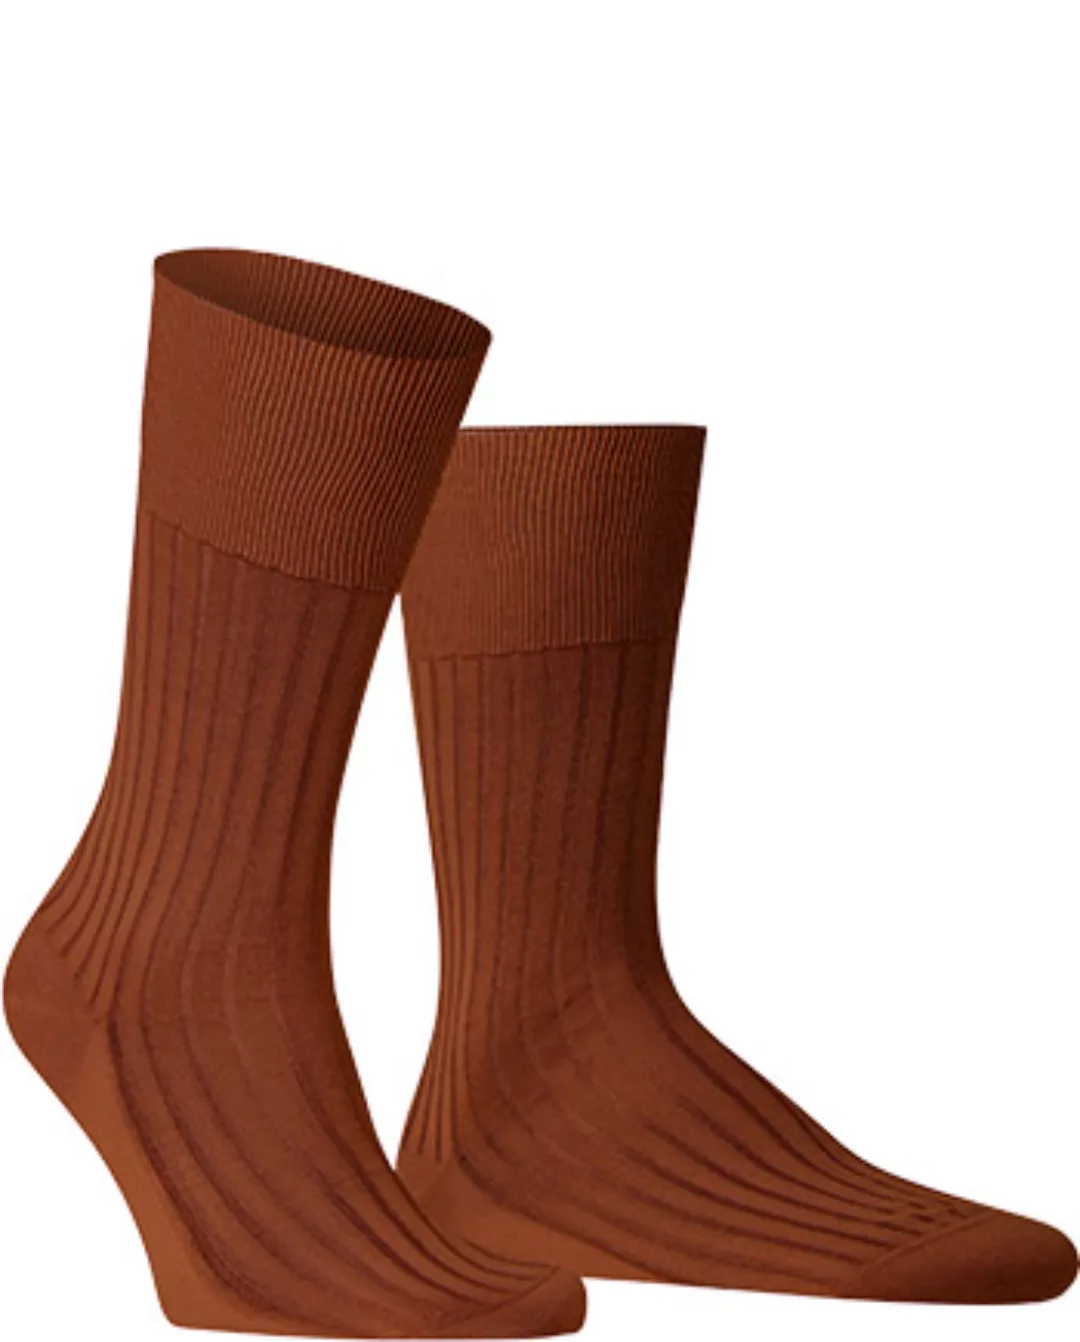 FALKE No. 10 Pure Fil d´Écosse Gentlemen Socken, Herren, 45-46, Braun, Uni, günstig online kaufen